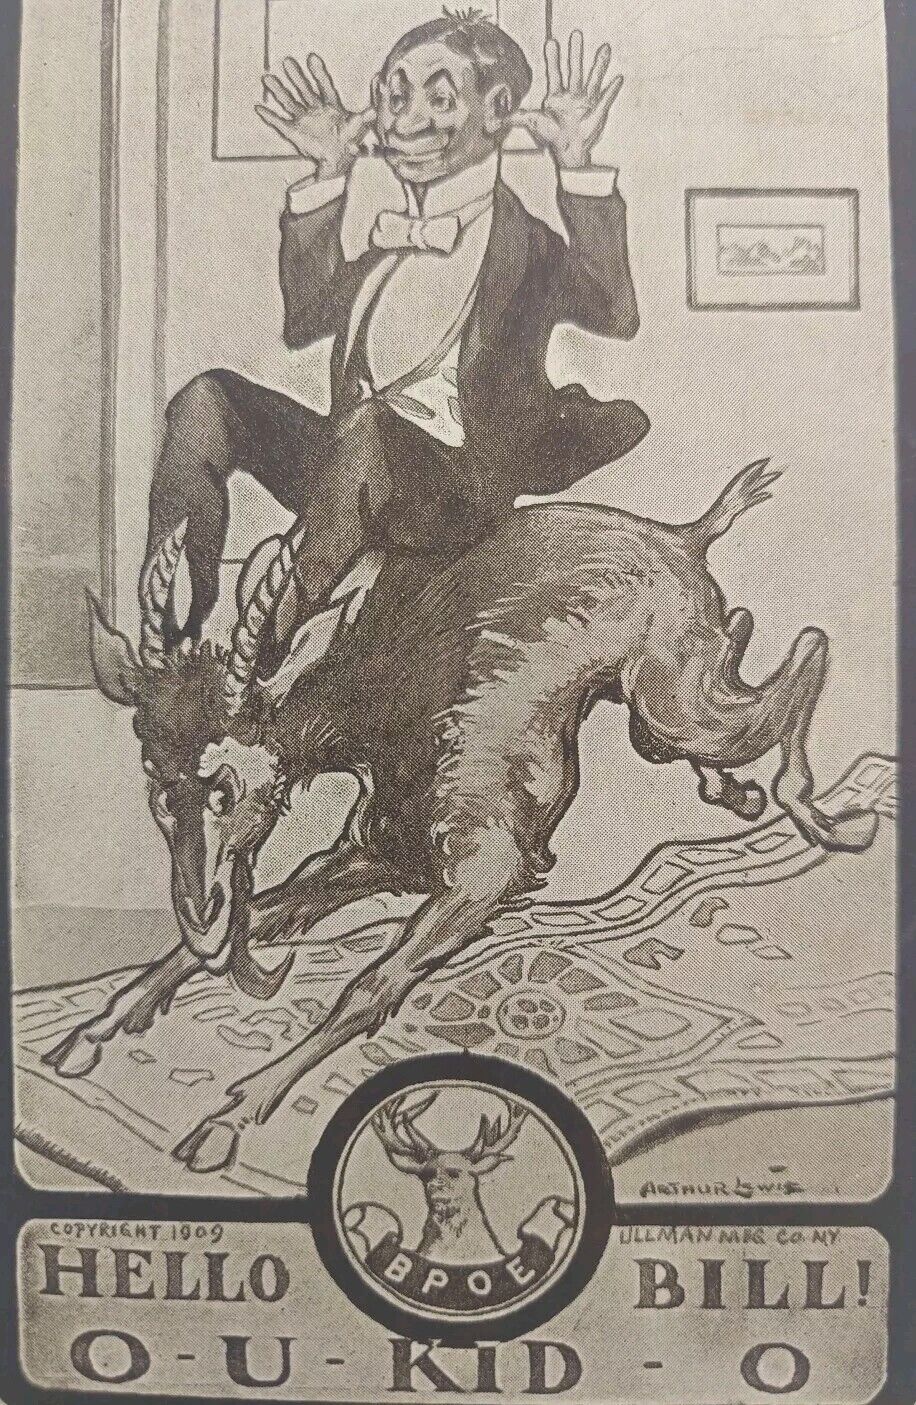 BPOE Elks Club Lodge Comic Greeting Hello Bill Riding Goat 1909 A Lewis Ullman